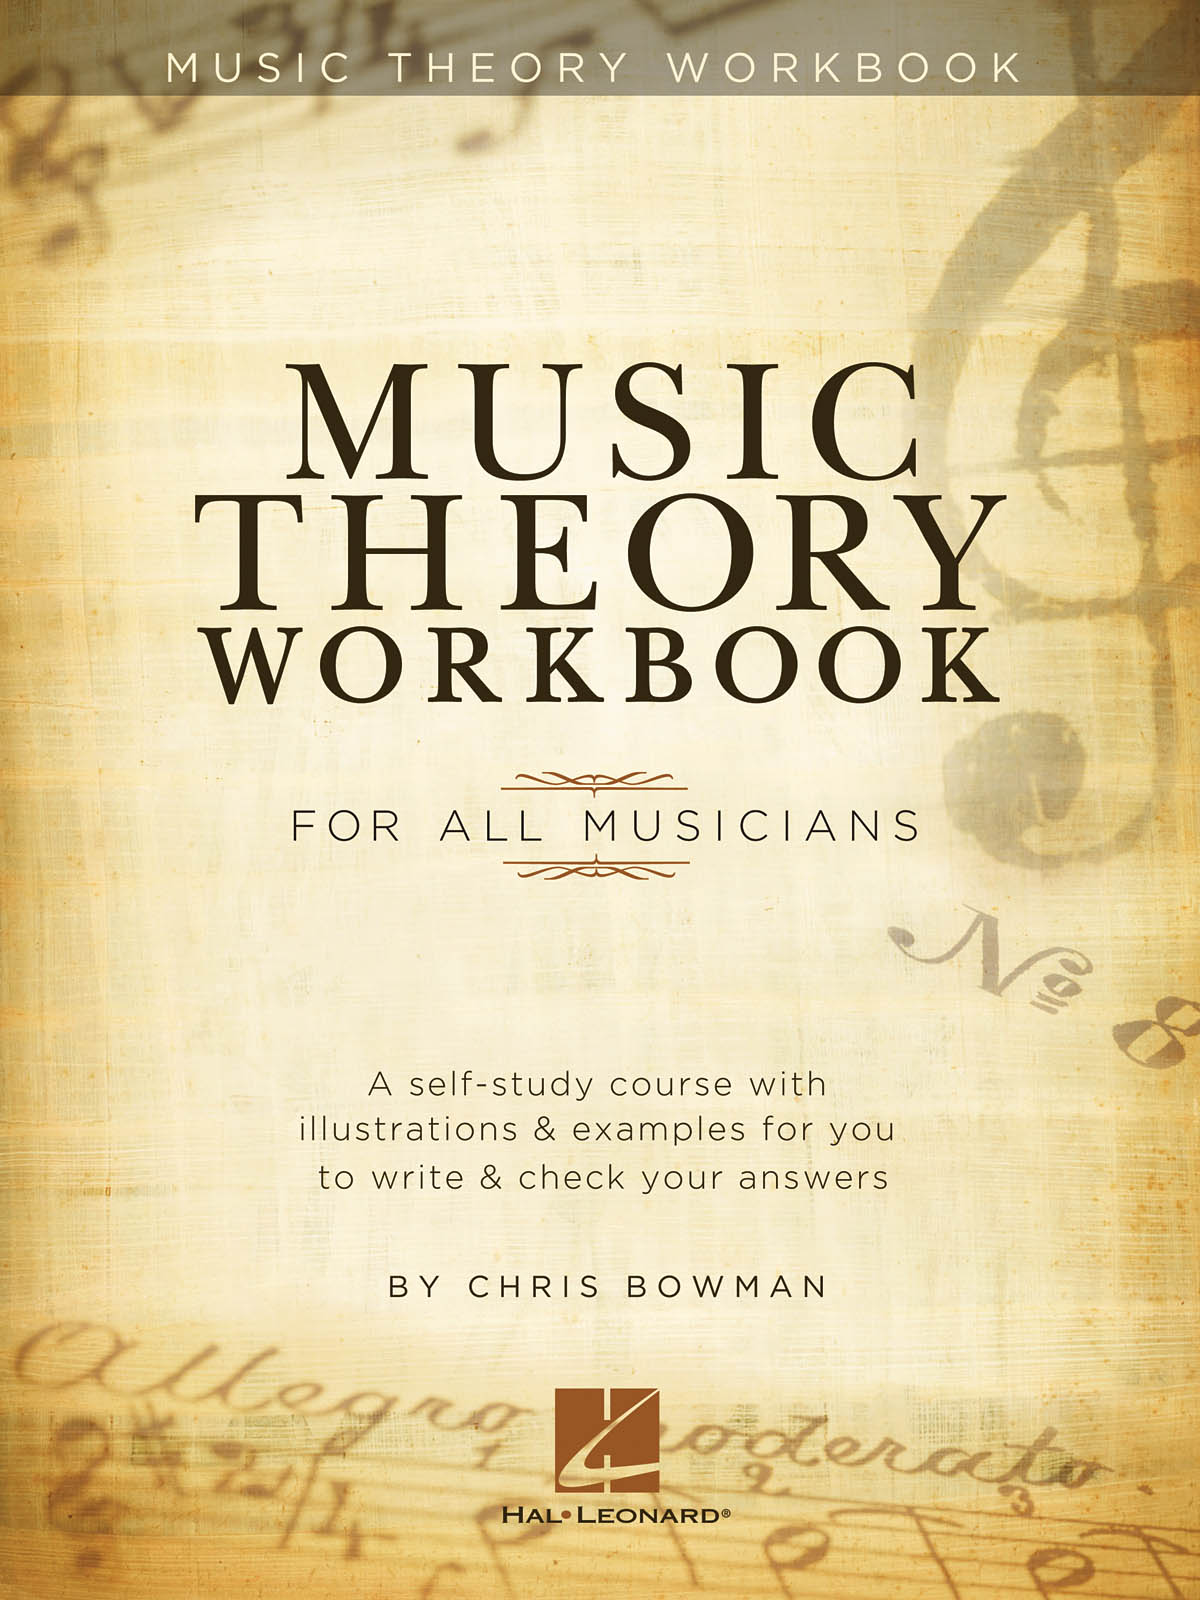 Music Theory Workbook: Reference Books: Theory